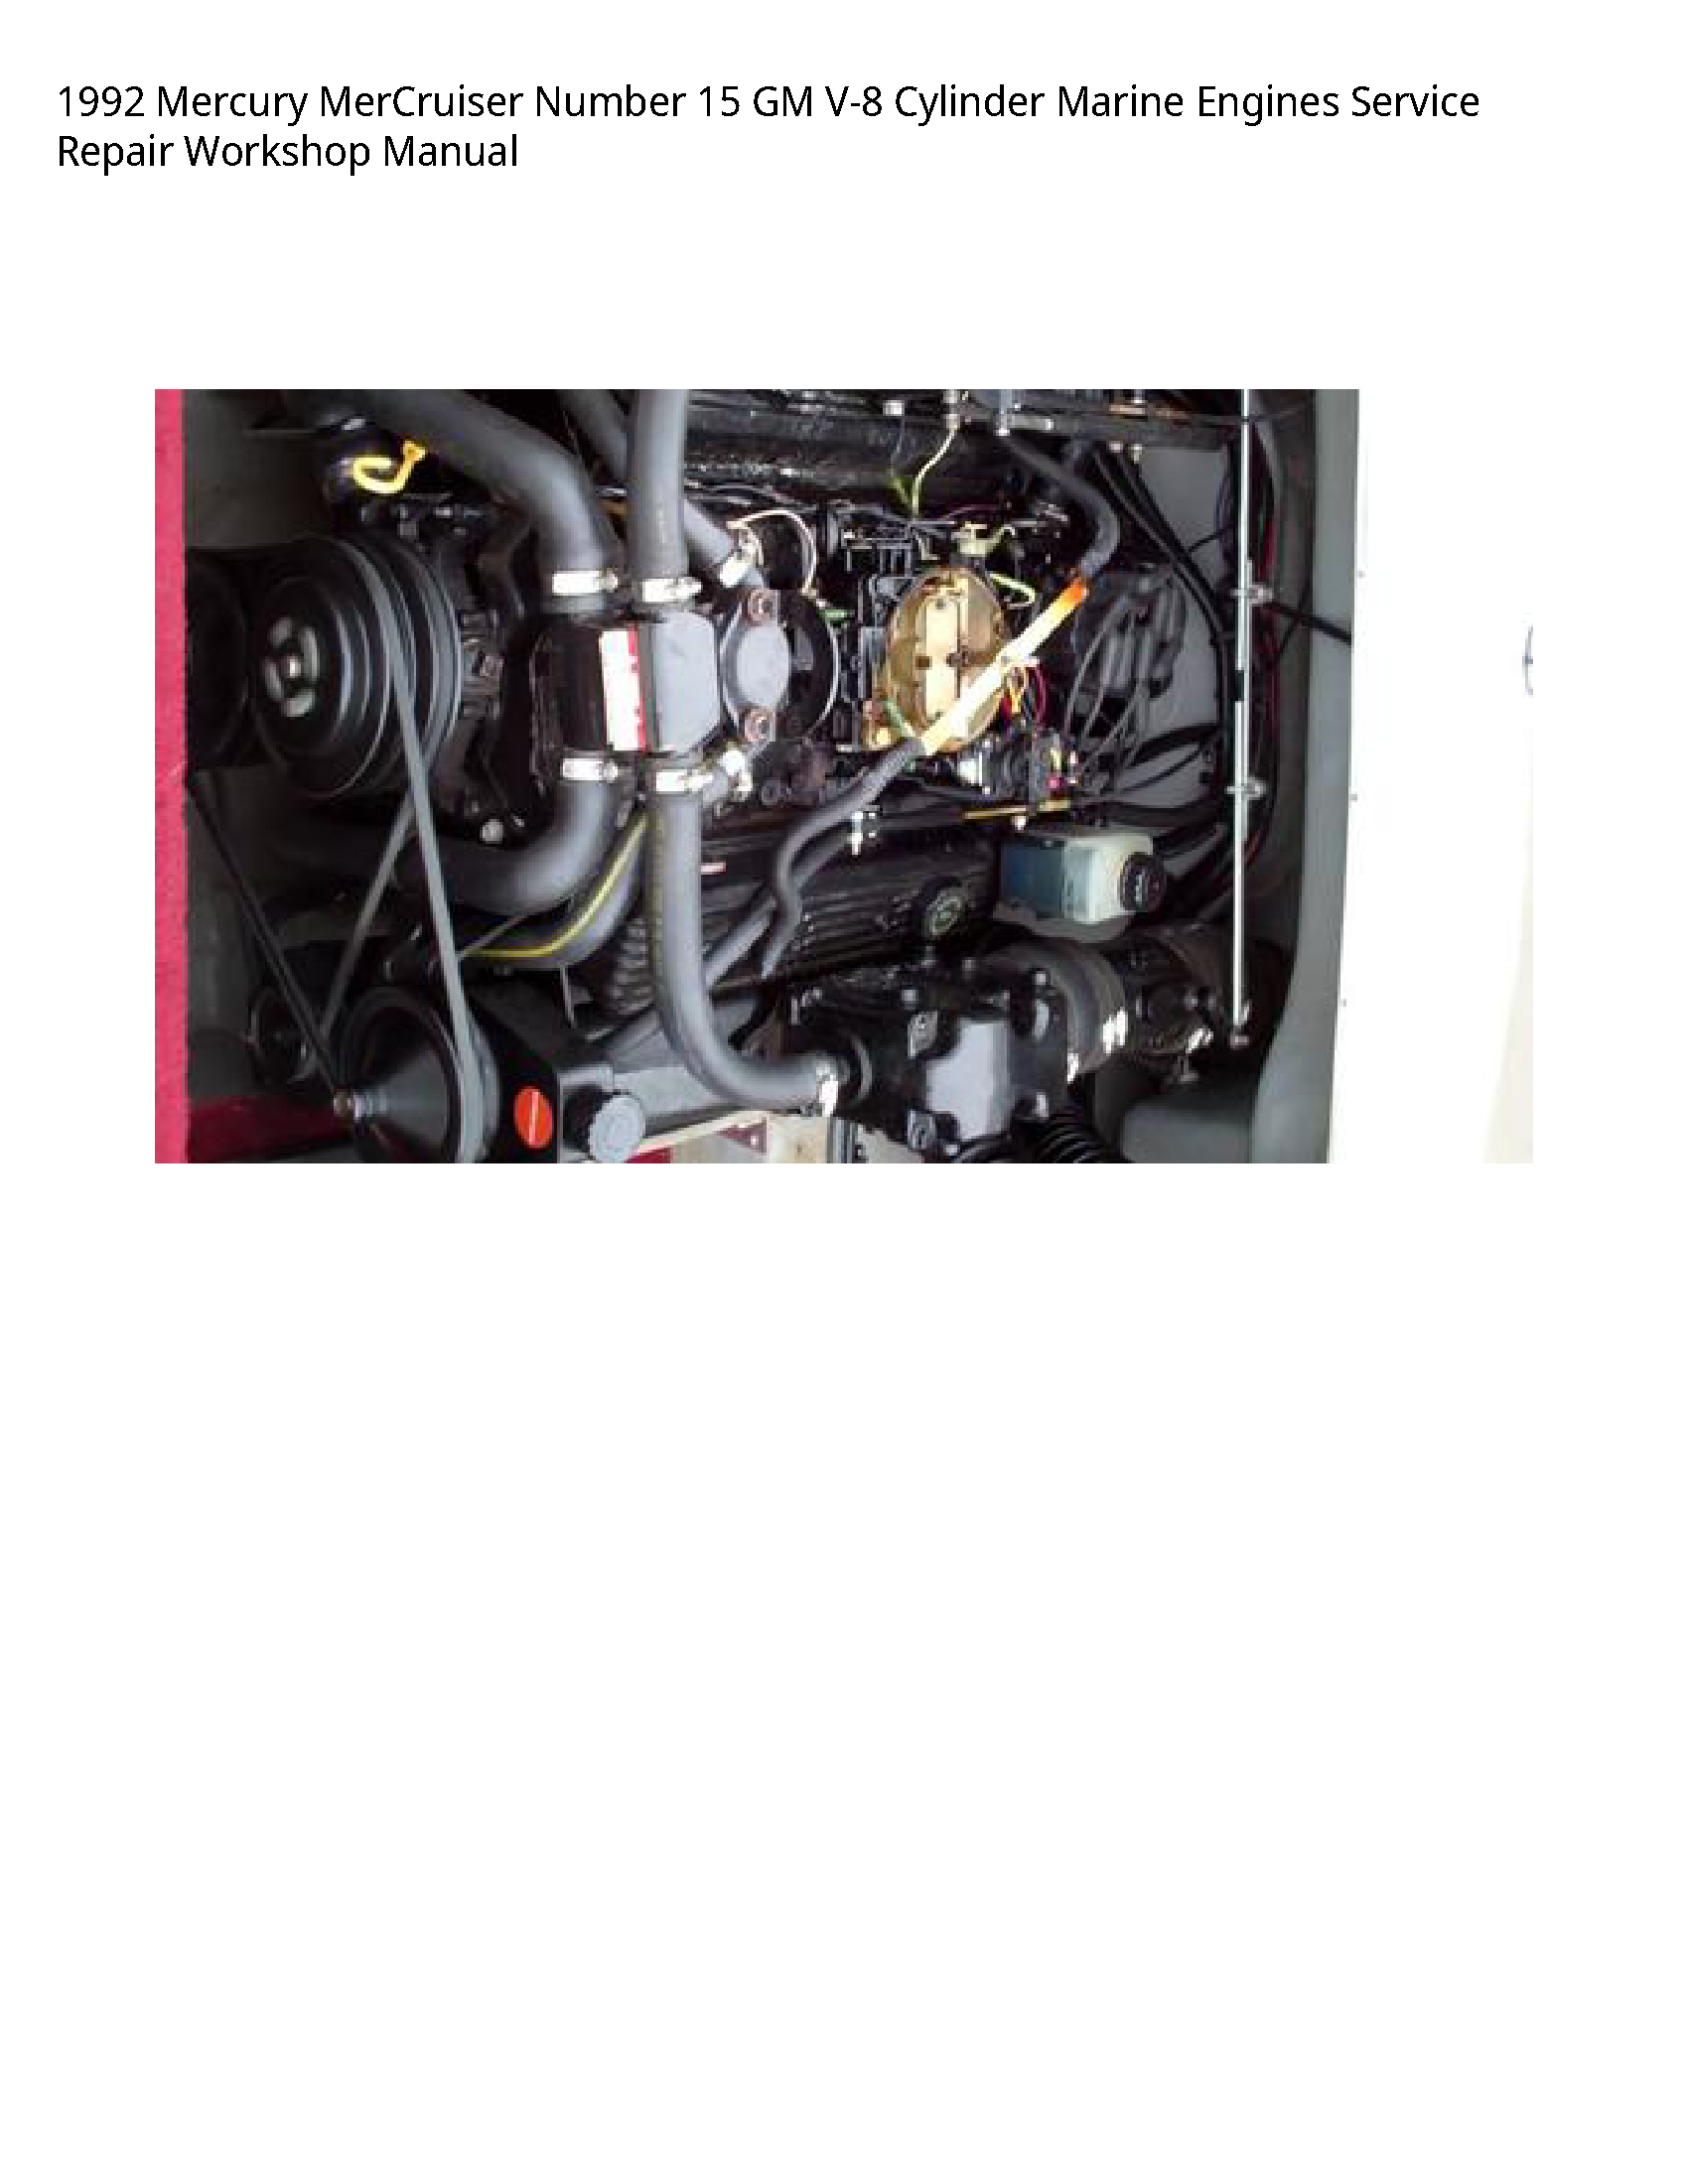 Mercury 15 MerCruiser Number GM Cylinder Marine Engines manual